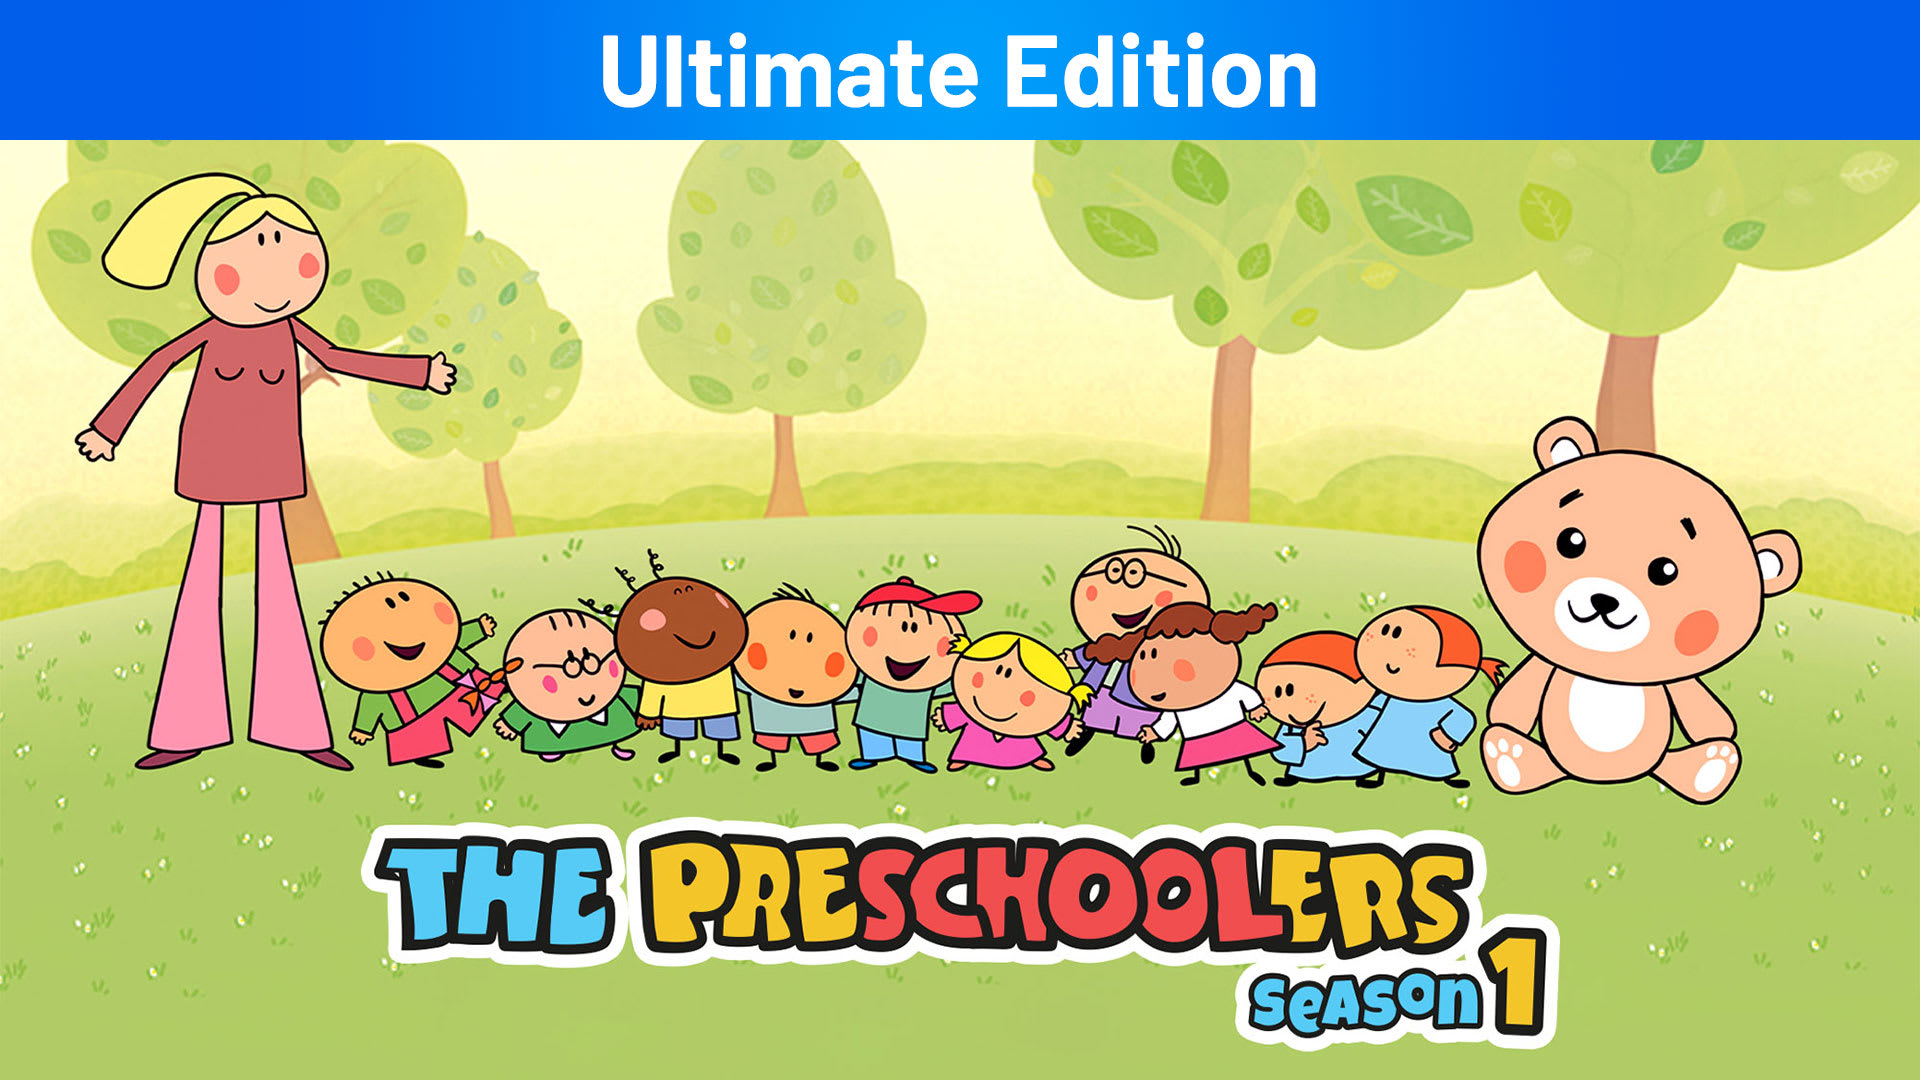 The Preschoolers: Season 1 Ultimate Edition 1